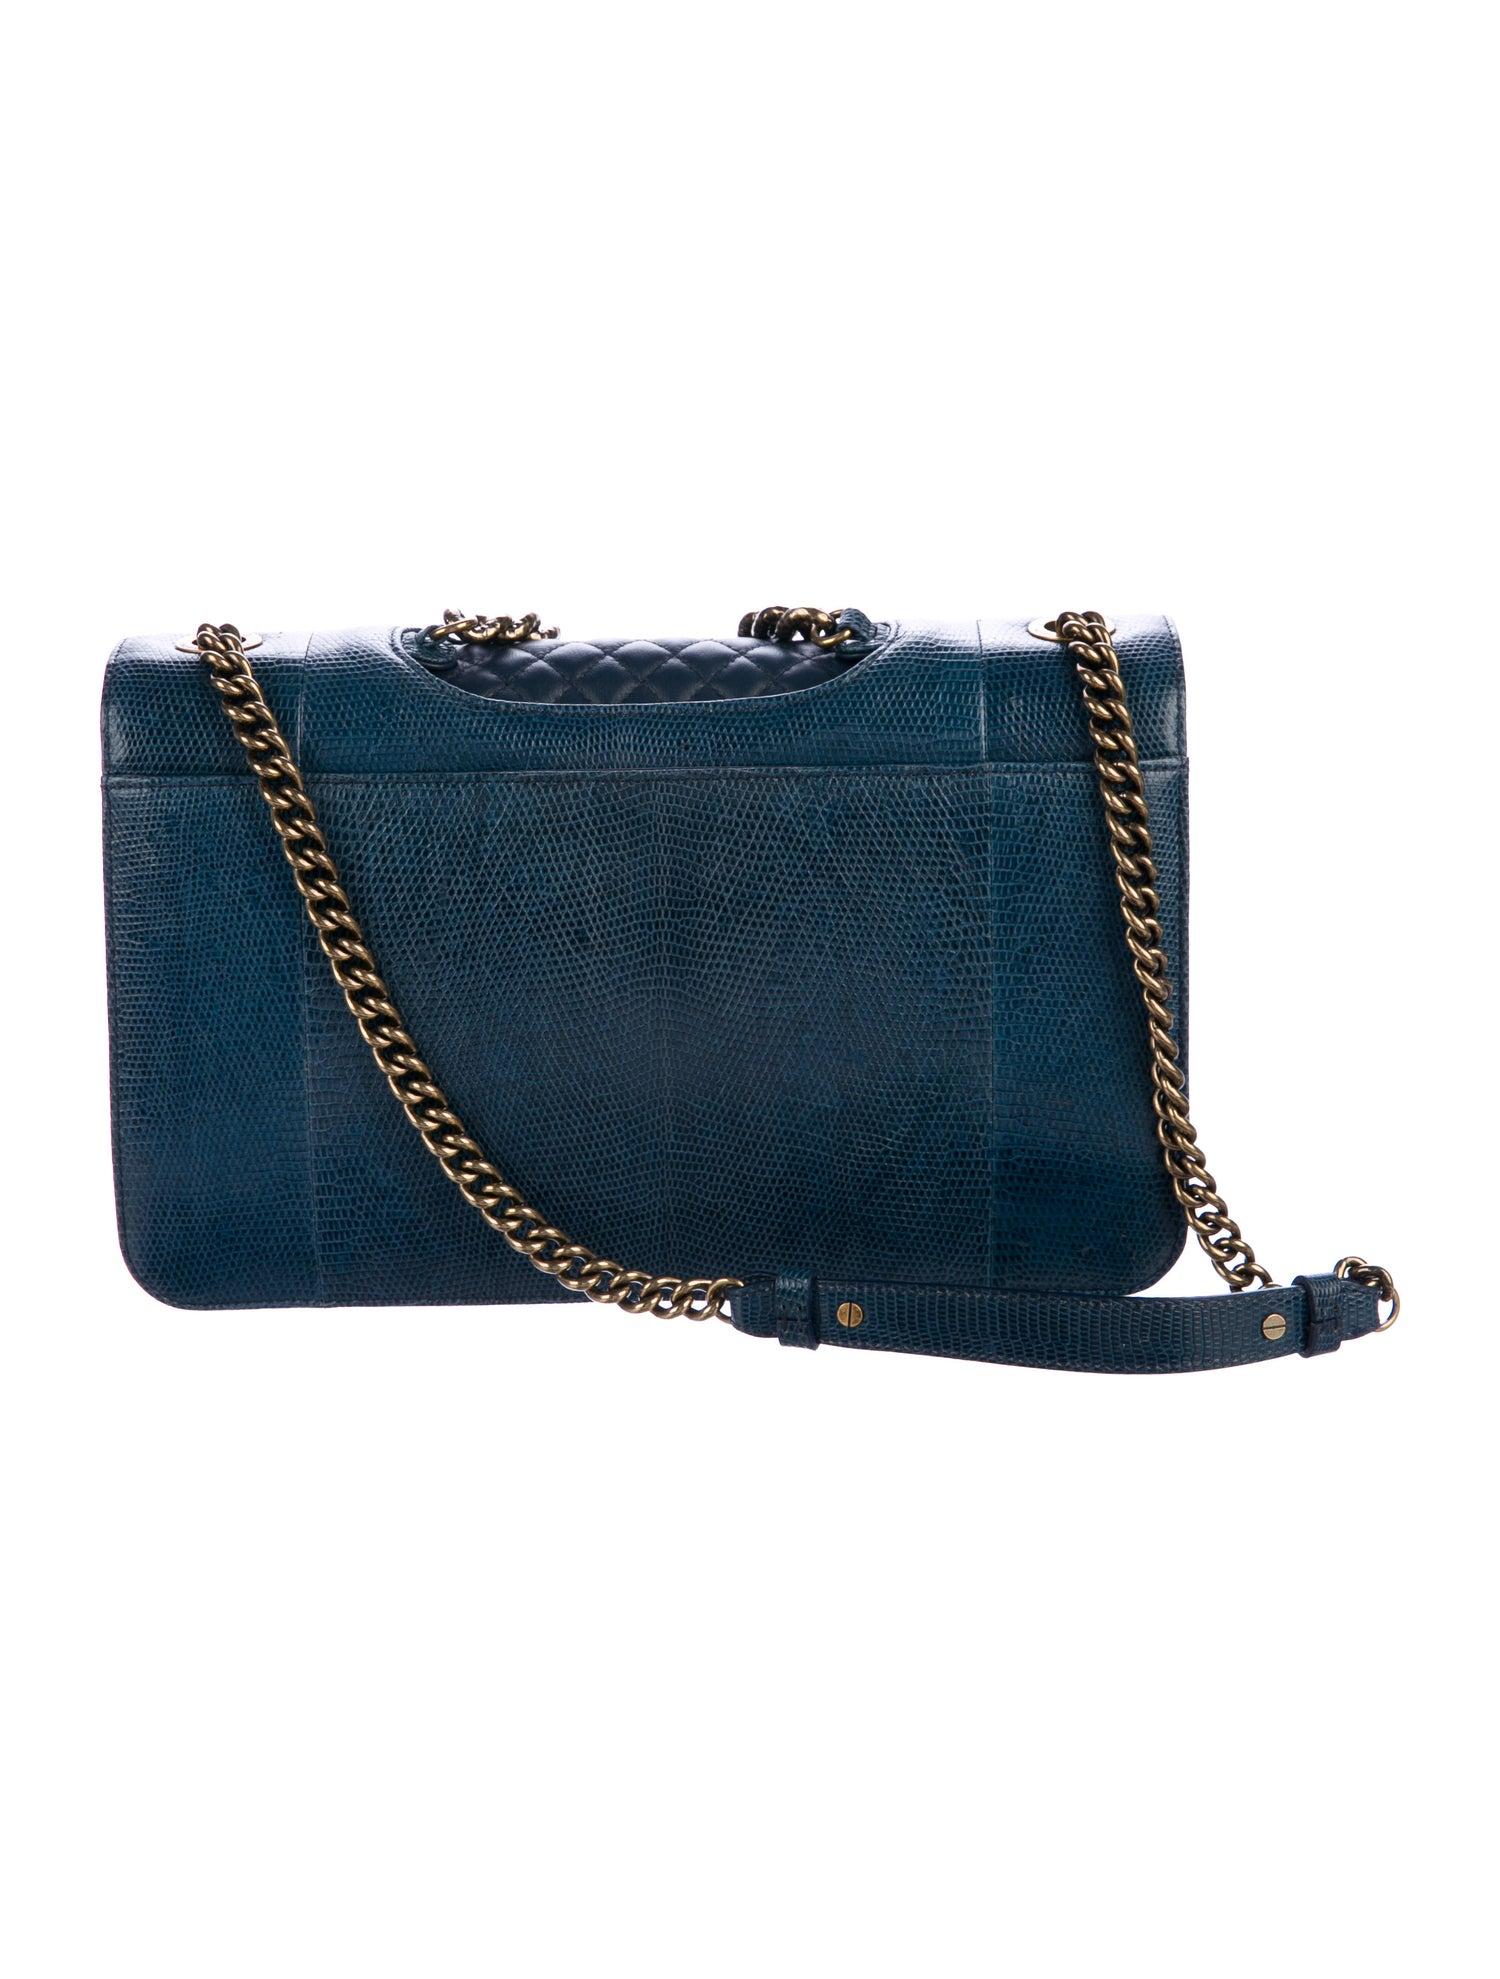 Black Chanel Blue Exotic Lizard Leather Gold Evening Medium Shoulder Flap Bag in Box